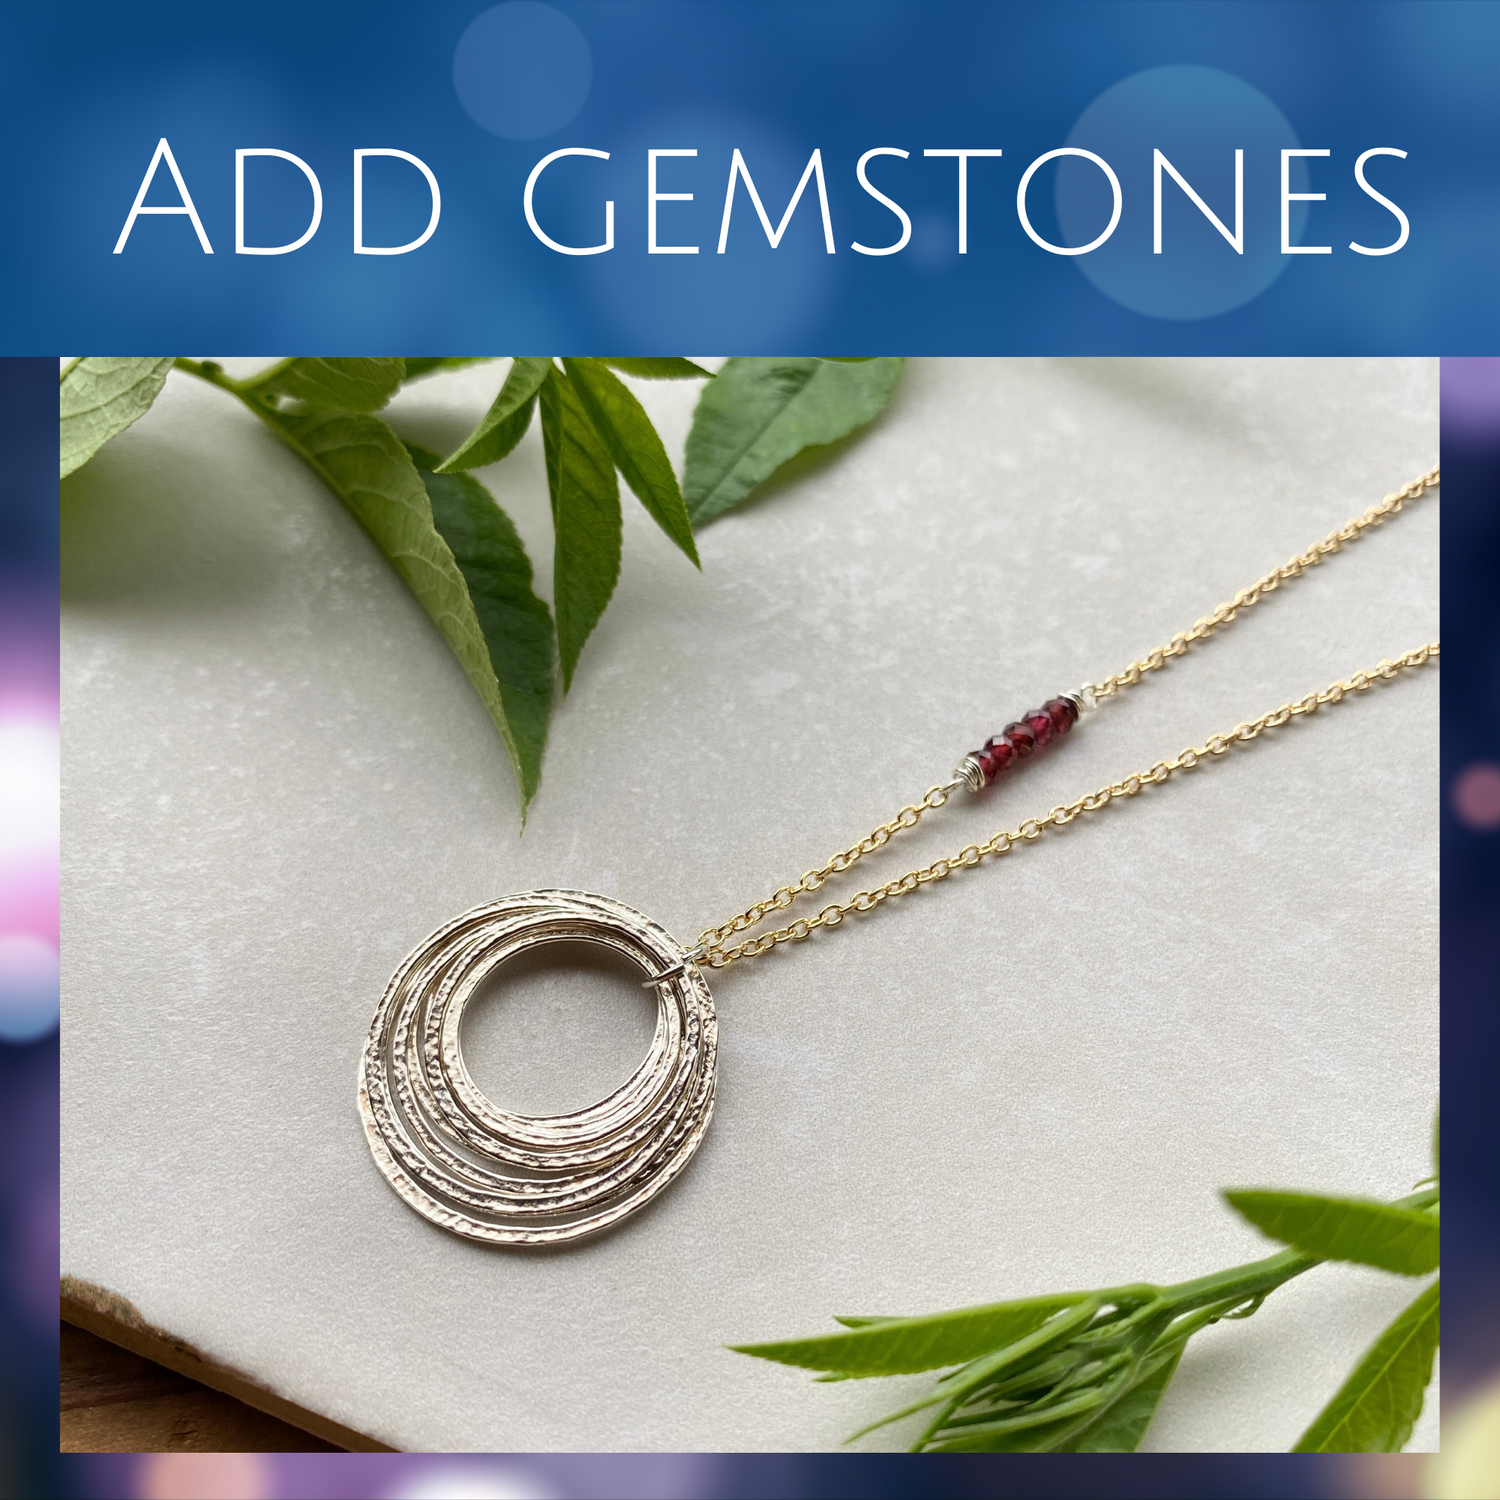 add gemstones to milestone necklaces